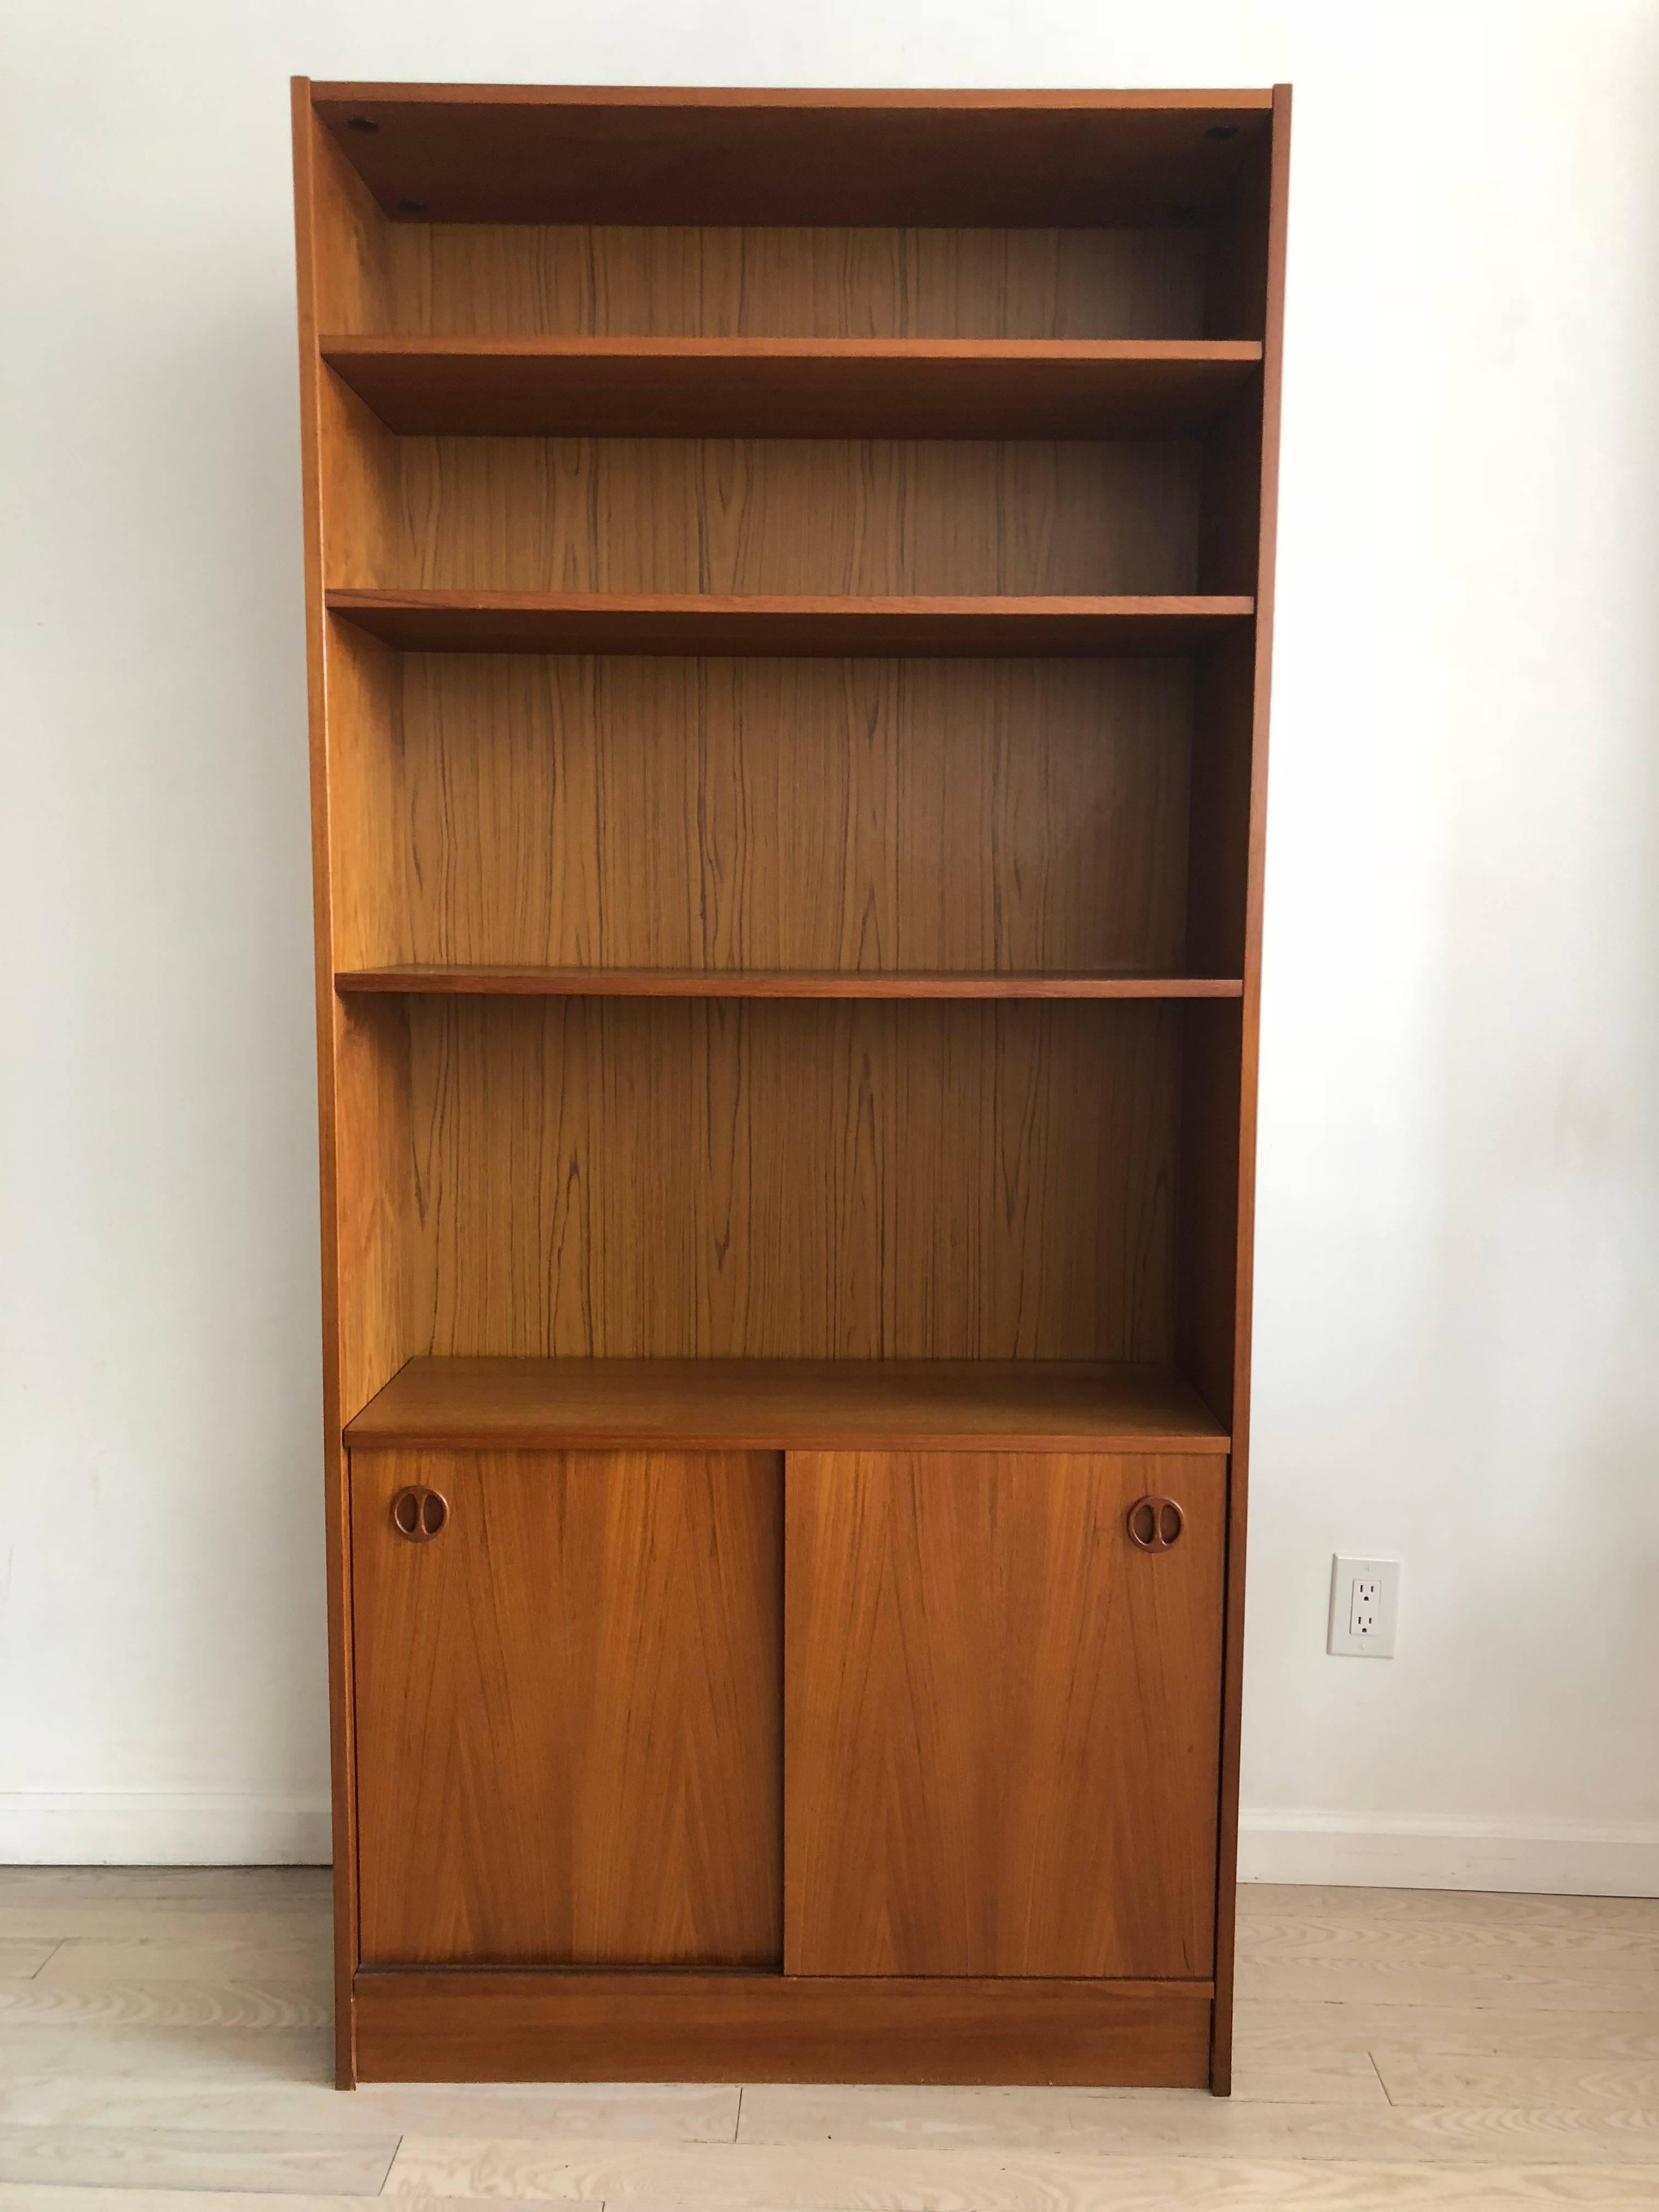 Danish midcentury teak bookcase by Poul Hundevad. Excellent condition. Adjustable shelves. Pretty circle wood pulls. Sliding cabinets below.